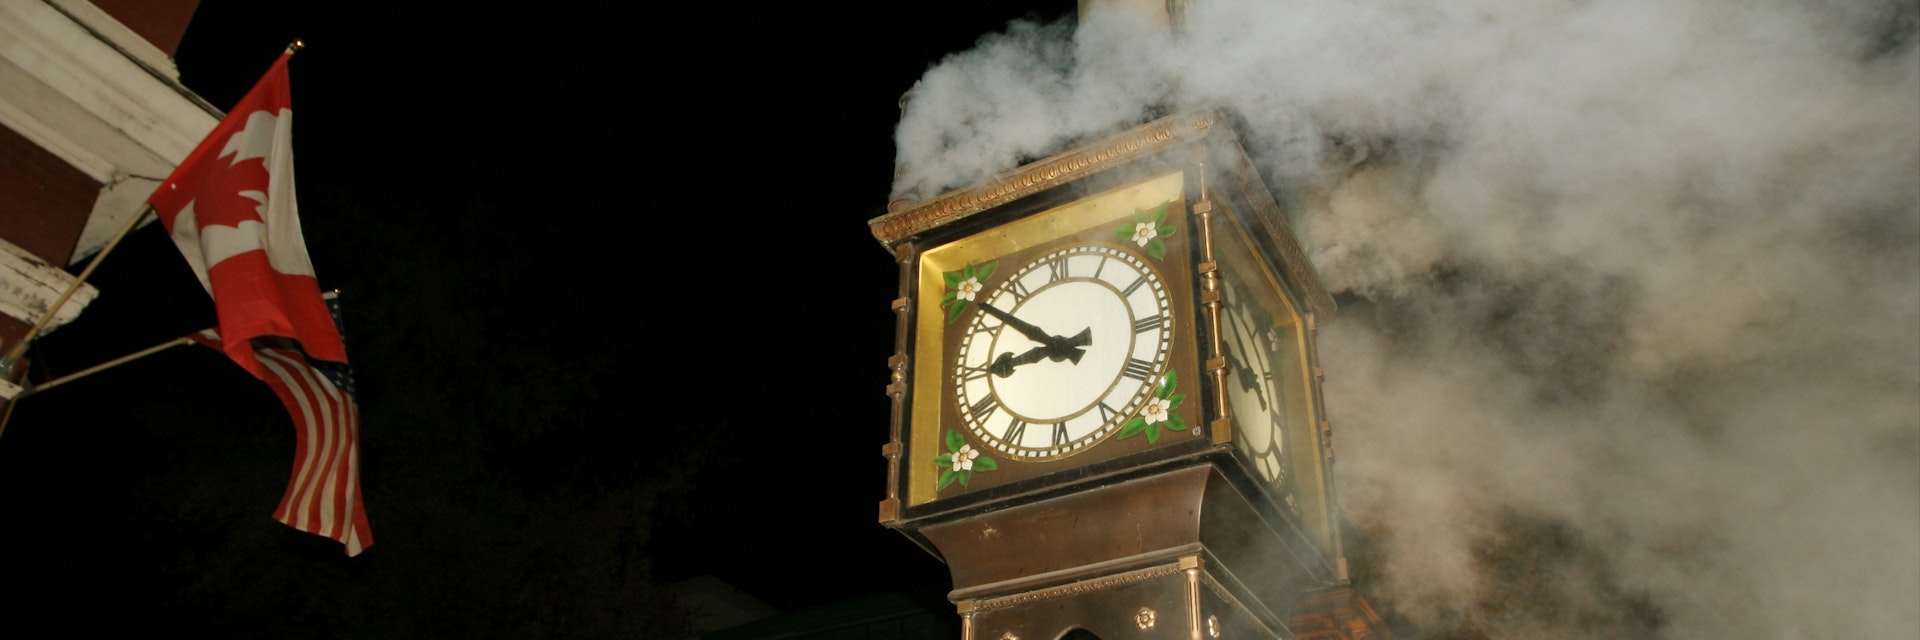 Gastown's famous steam-powered clock.